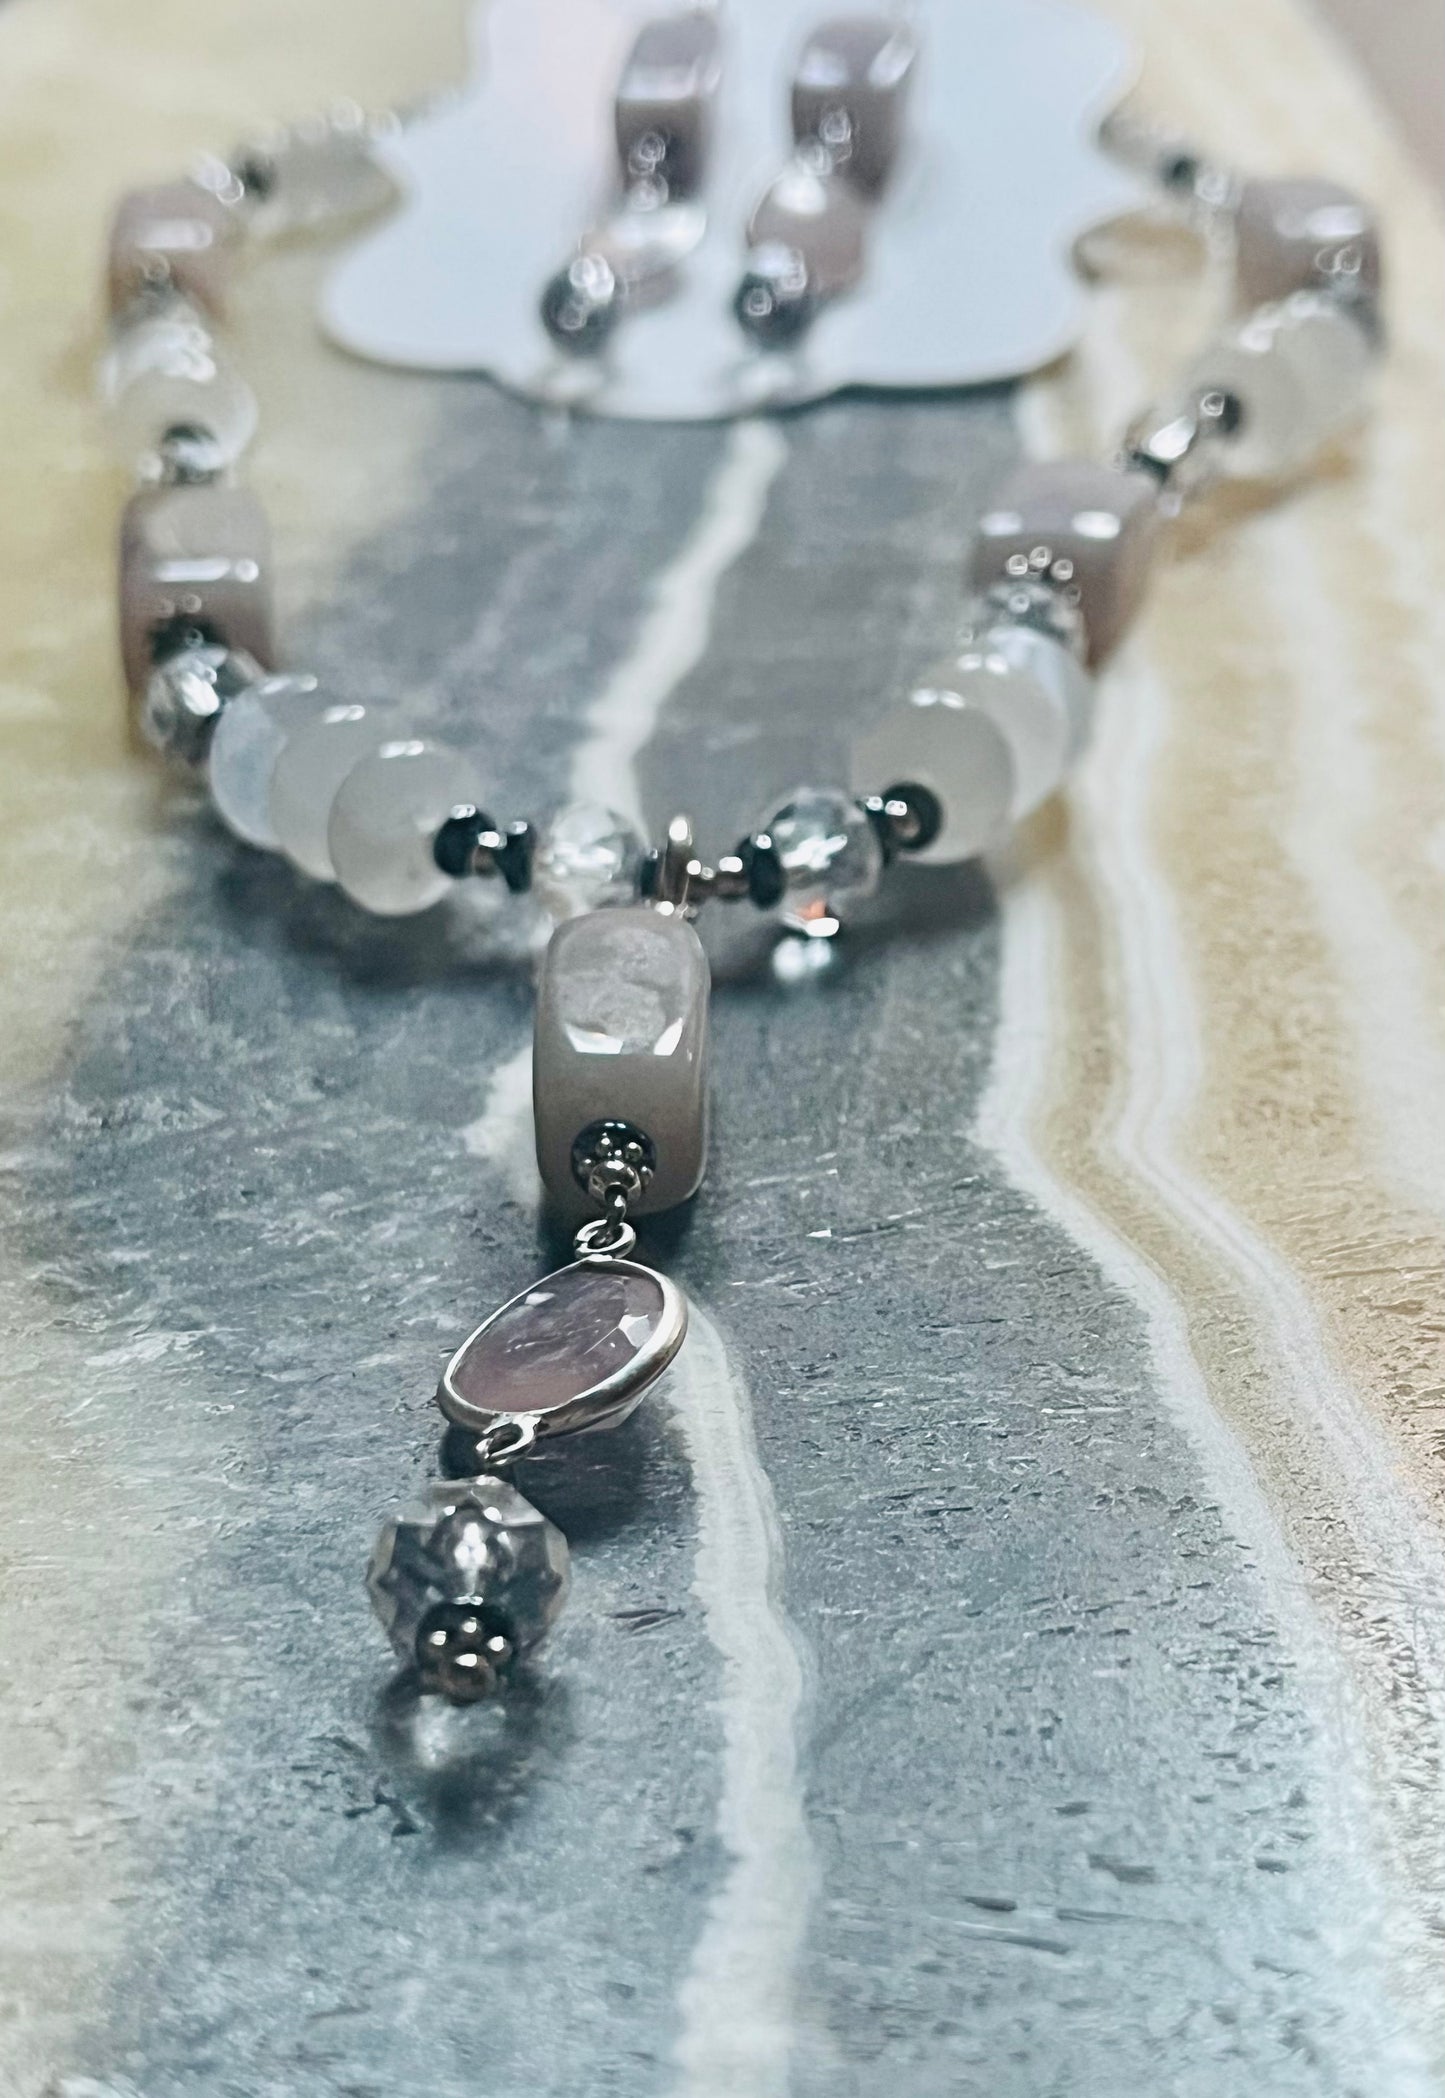 Rose Quartz, Selenite and Crystal Quartz Necklace and Earring Set